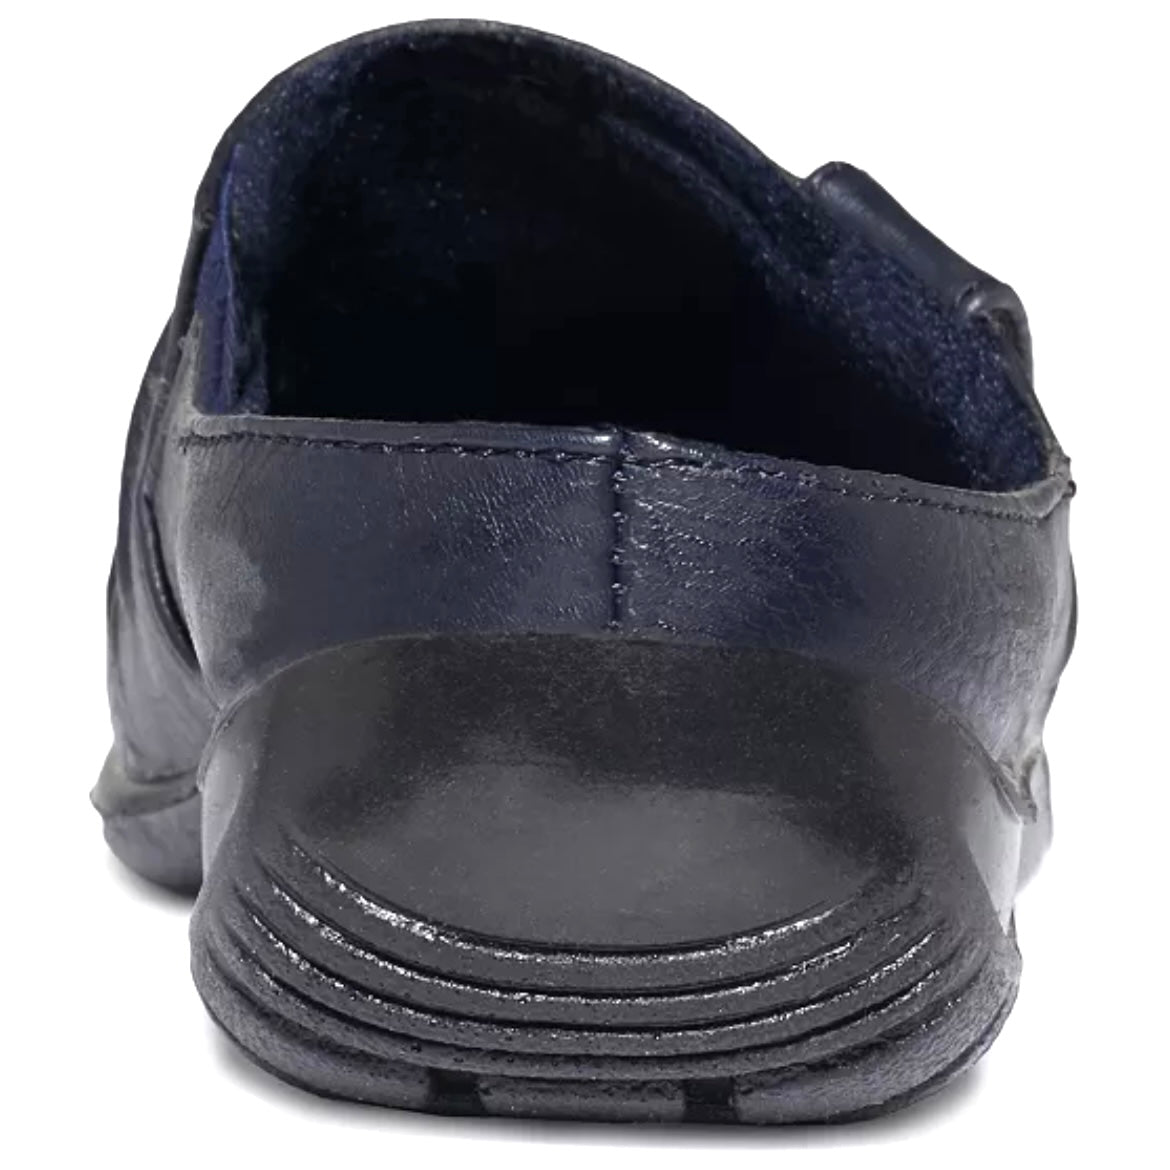 HOLLY Navy/Matte Comfort Slip On Flats Size 8 N Women's Clogs